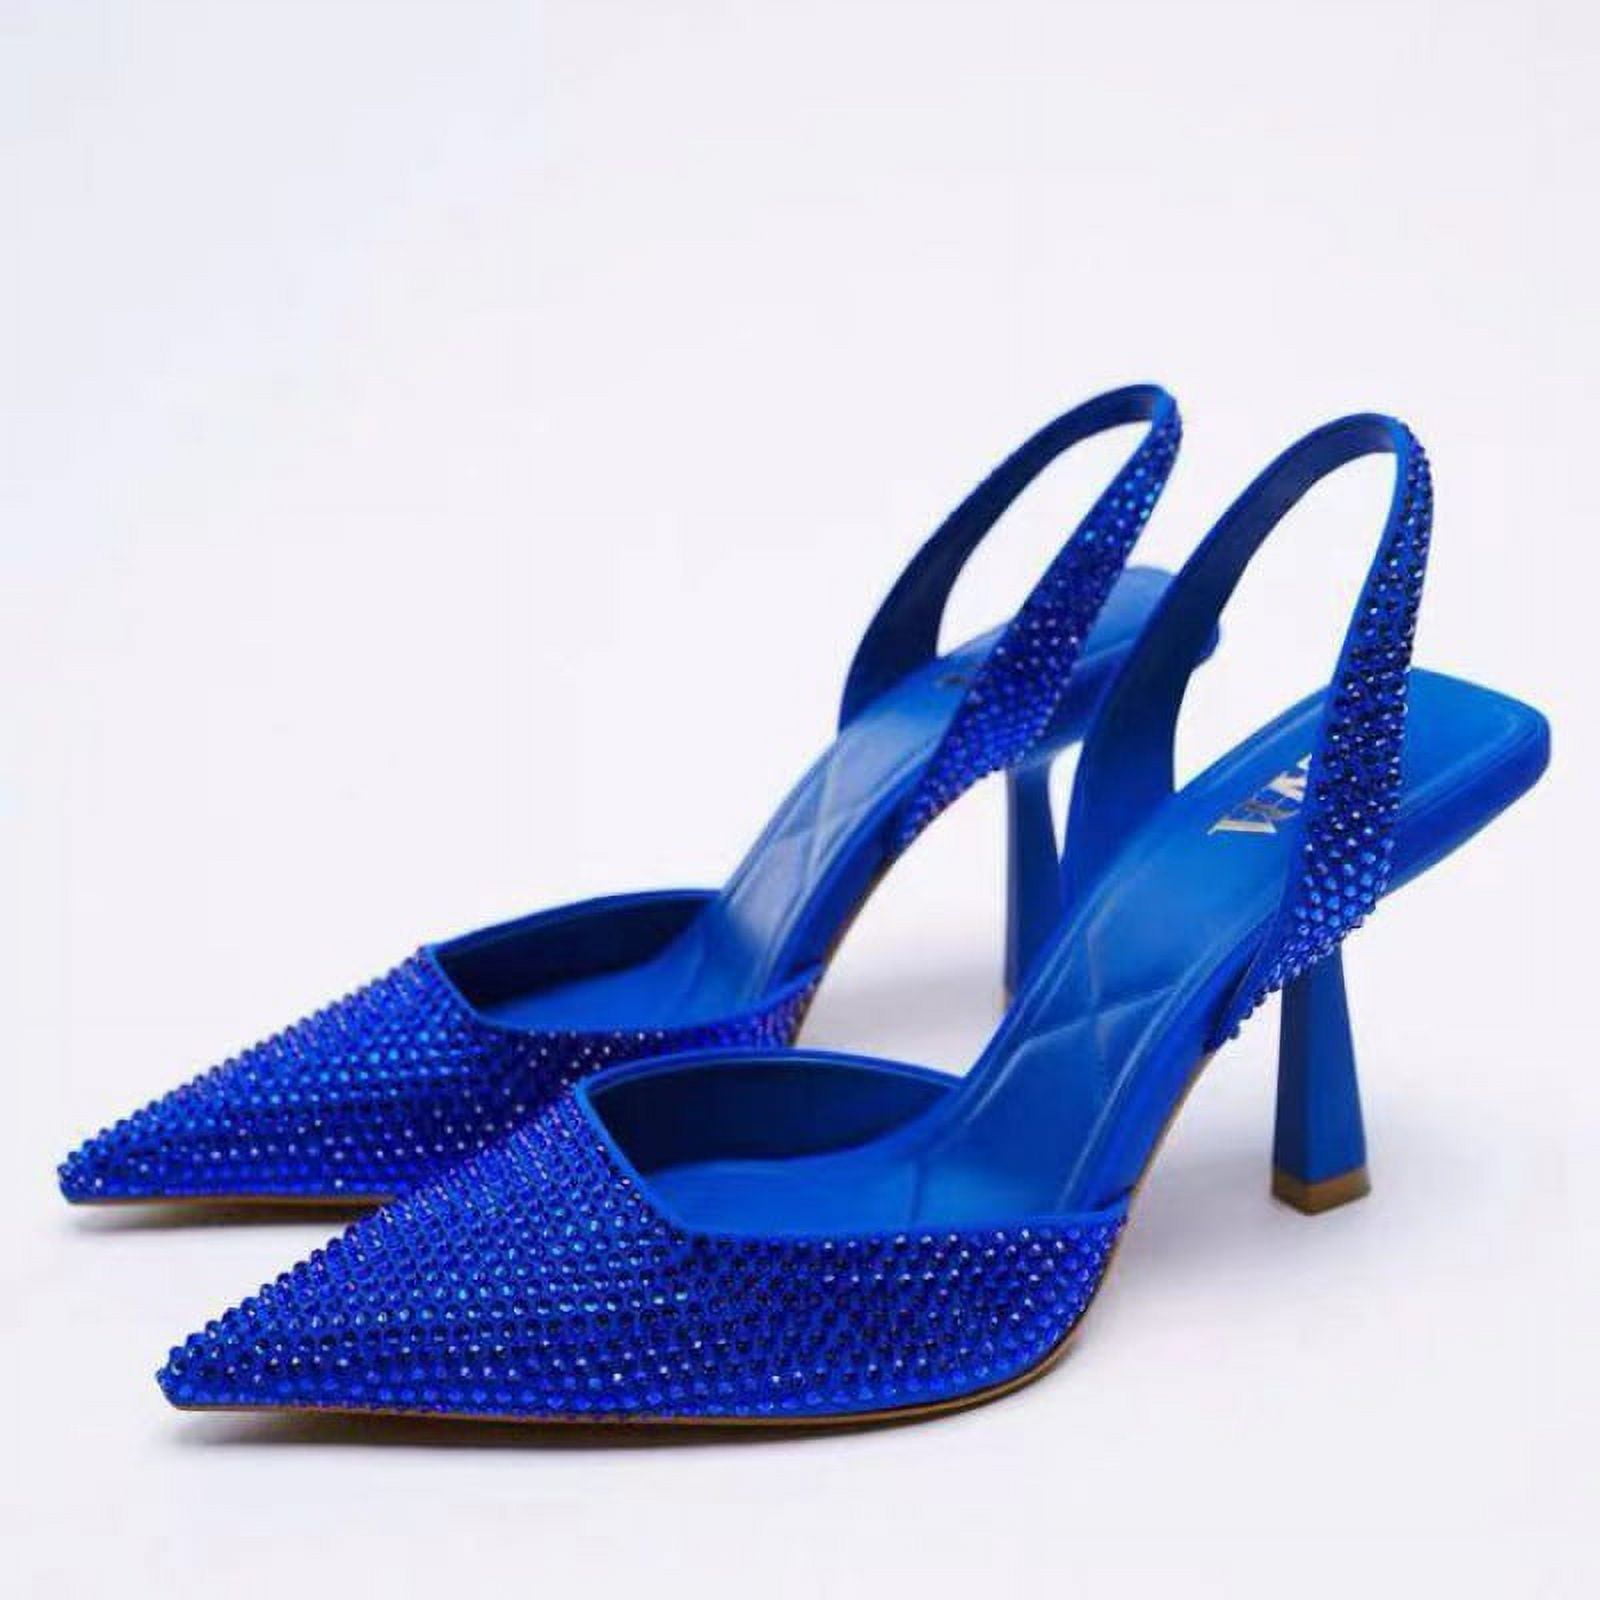 Isaac Mizrahi New York Silver and Black Sparkle Heels Size 7 | eBay